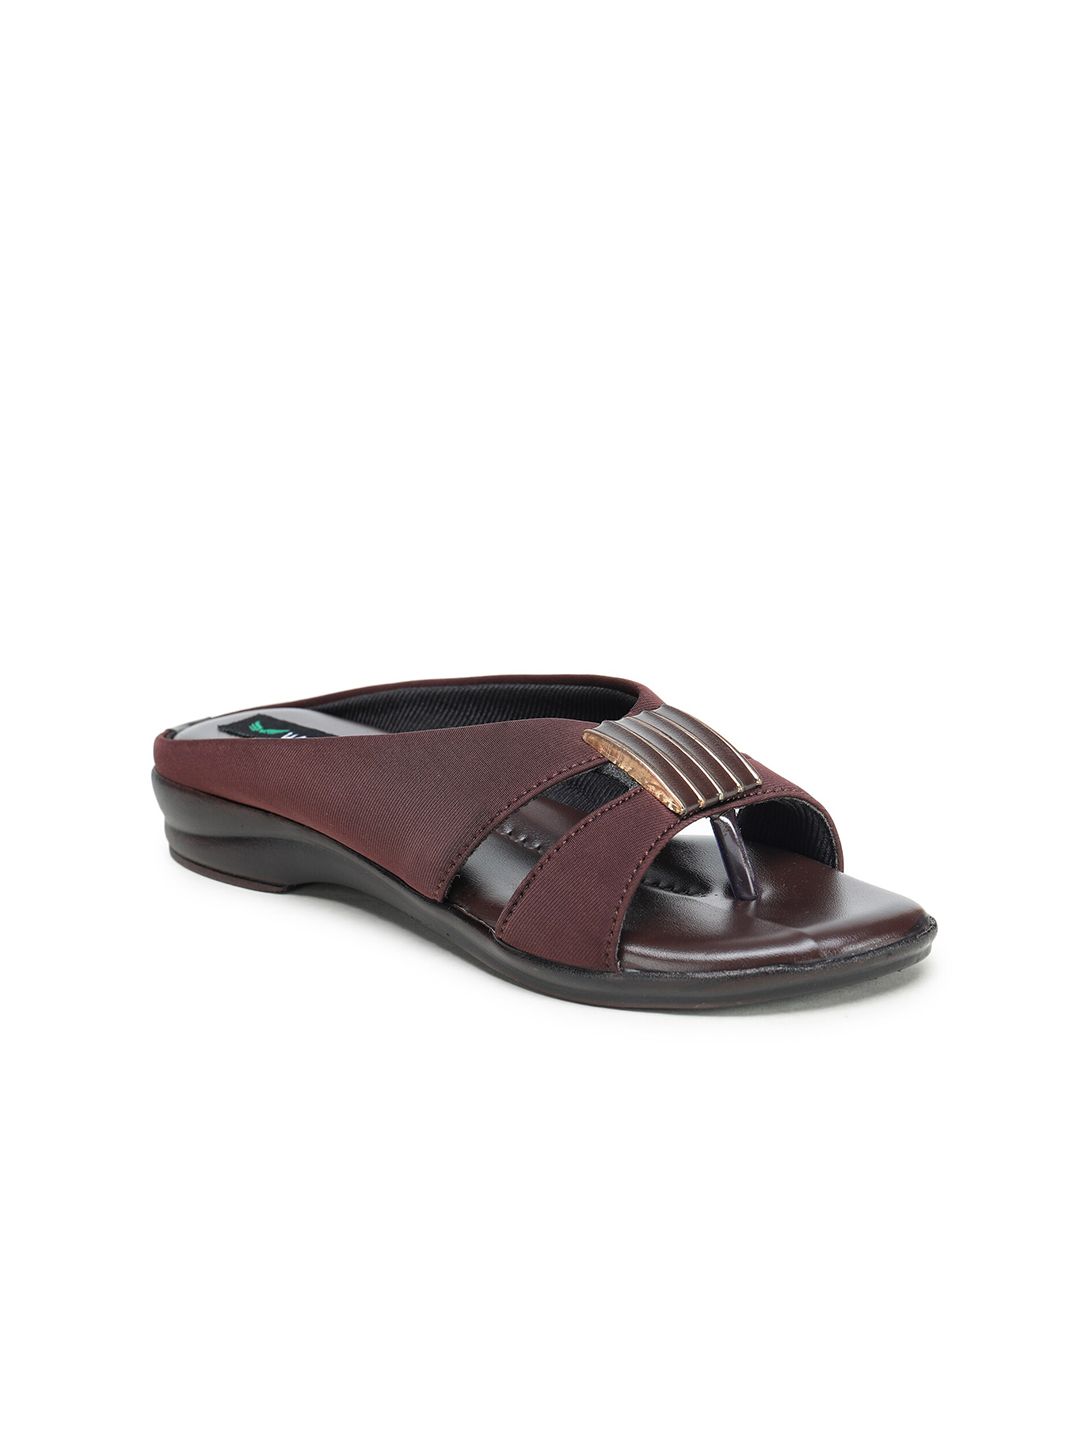 Walkfree Brown Comfort Sandals Price in India